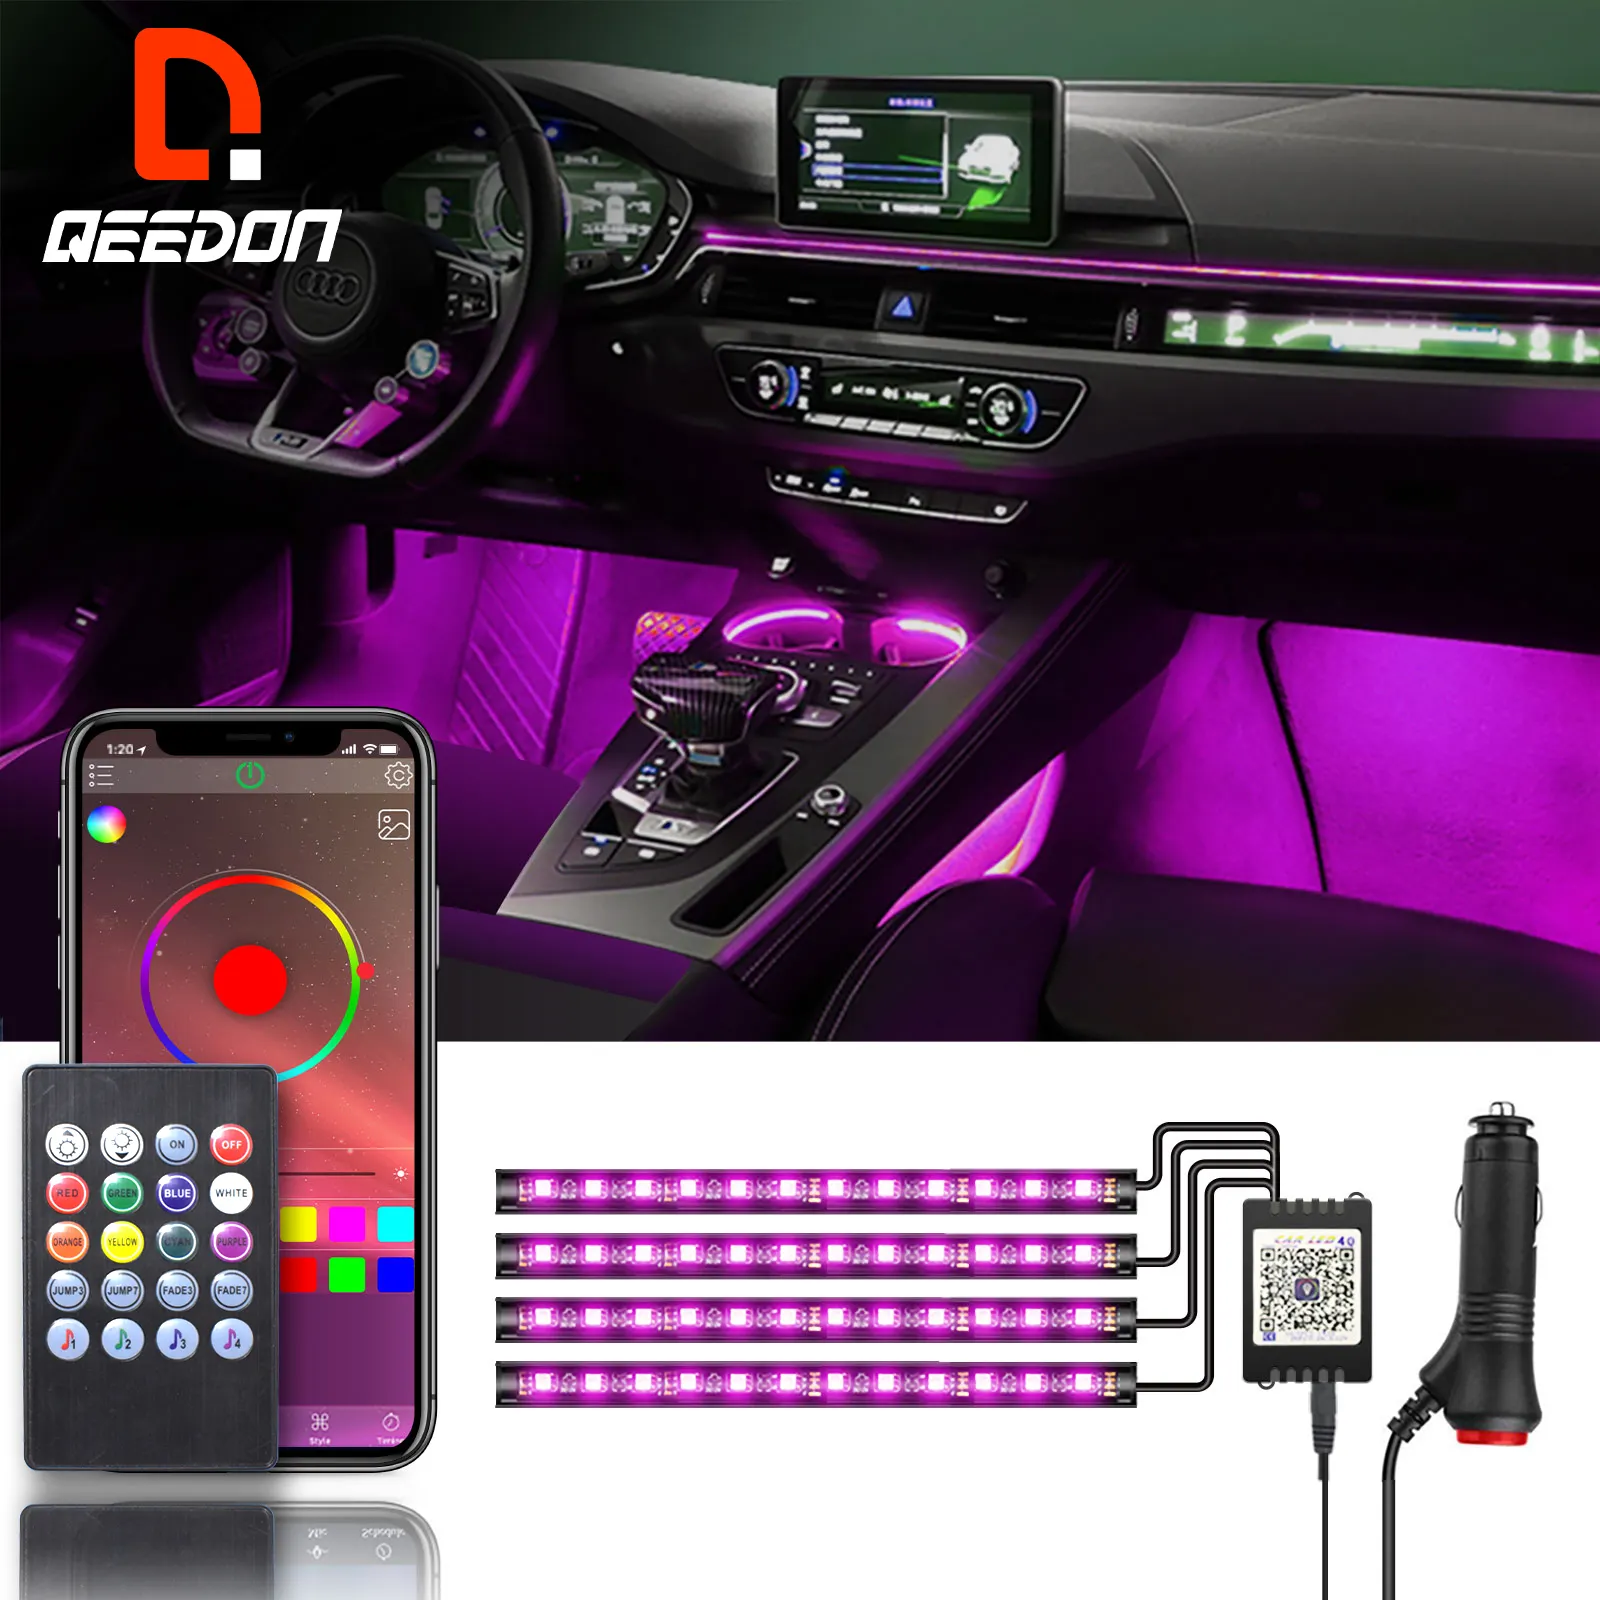 Qeedon 12V 30 LEDSRGBリモートカーデコレーションライトインテリアミュージックシンクエースns雰囲気カーLEDライトストリップ車用